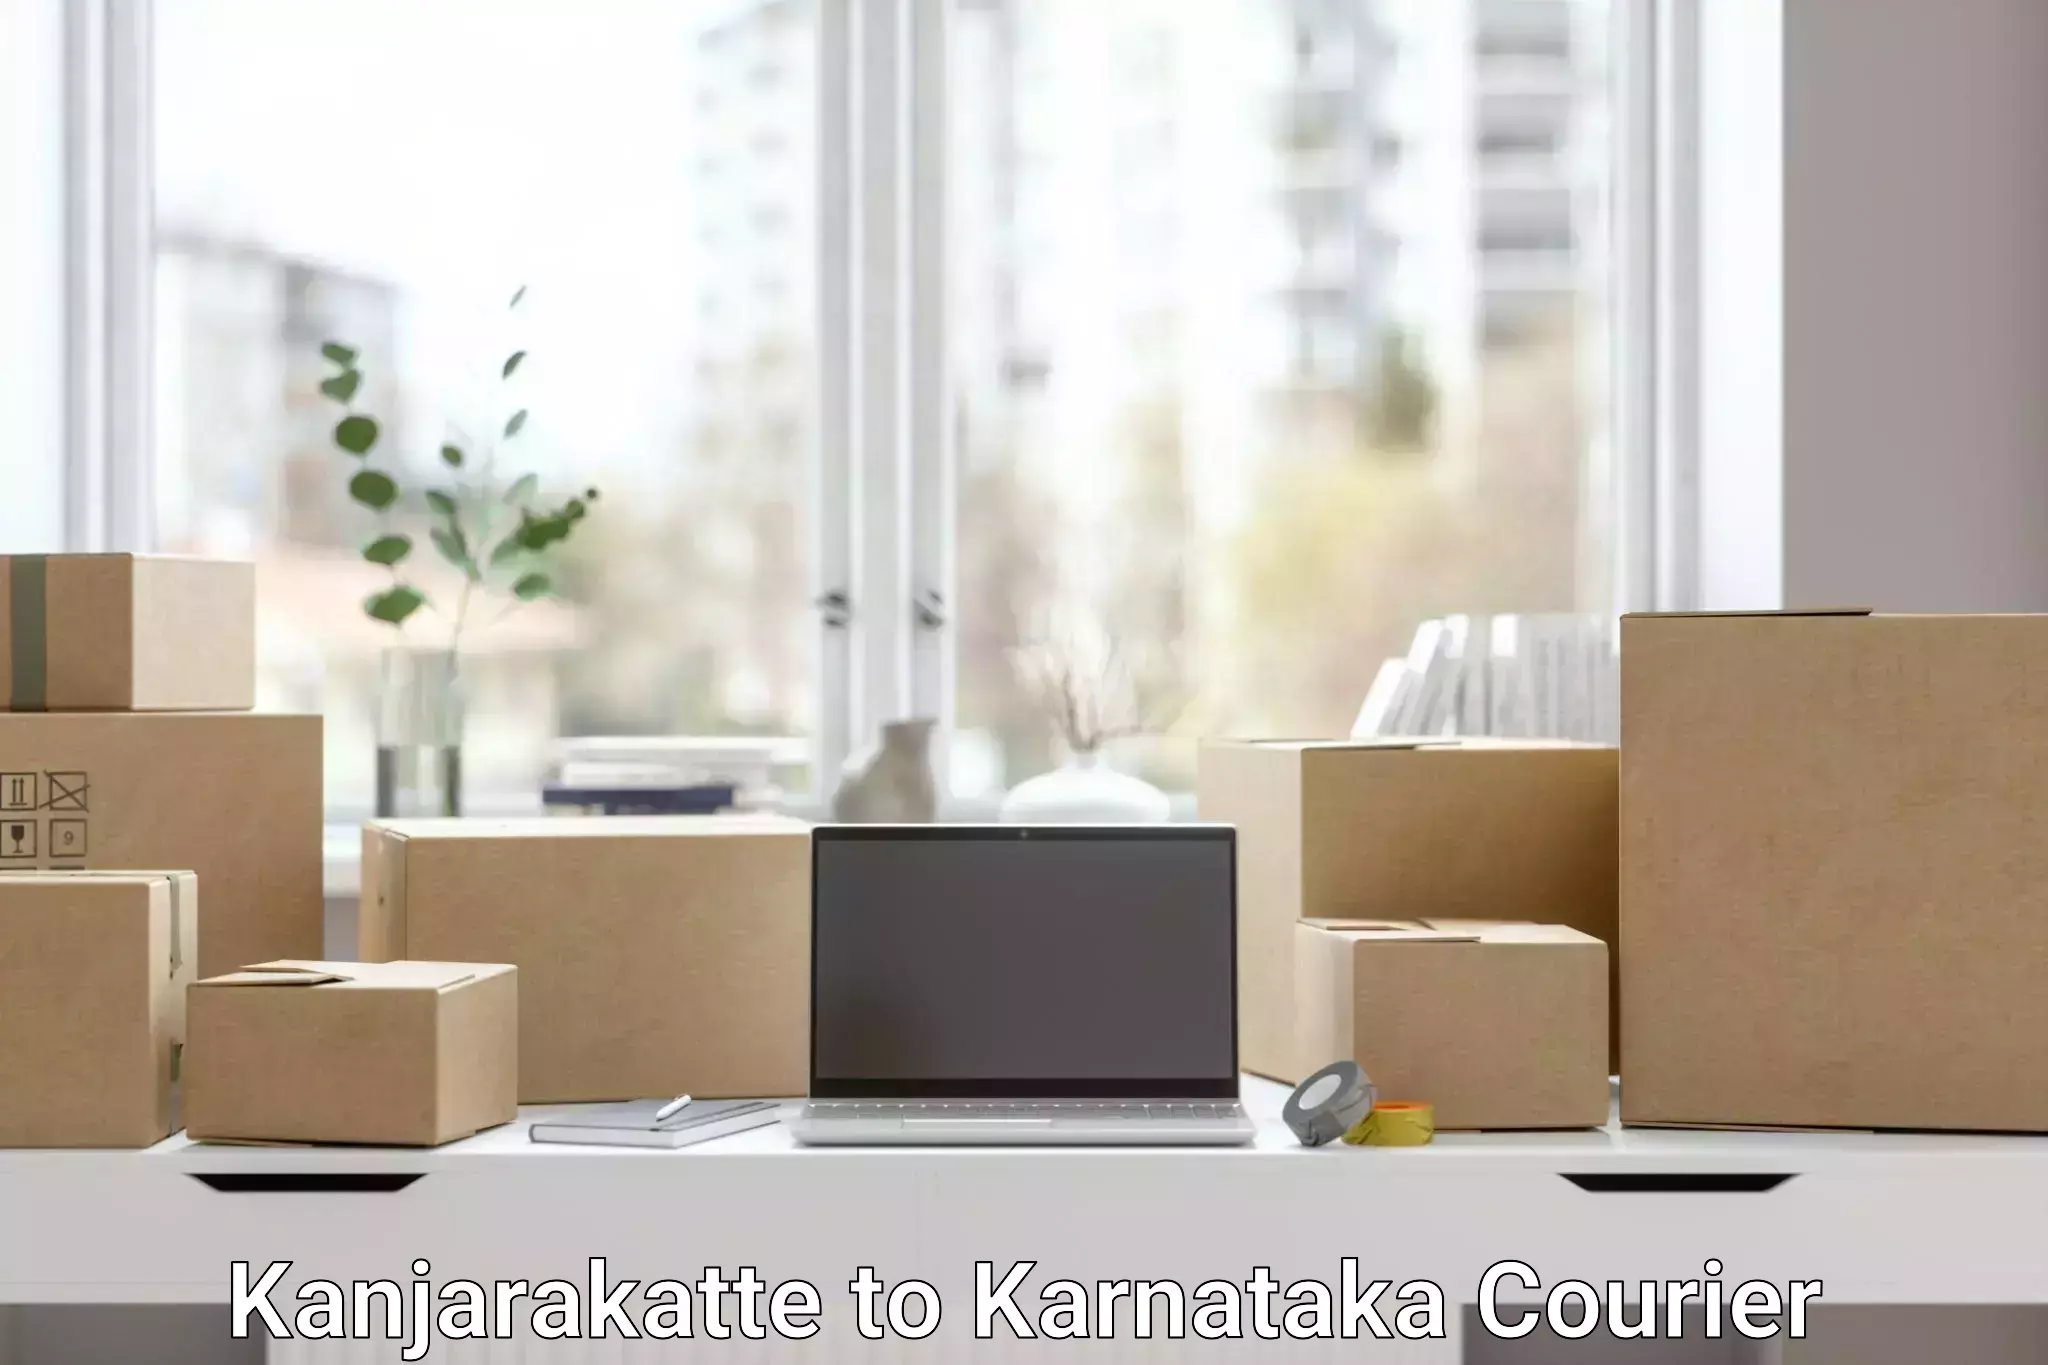 Cash on delivery service Kanjarakatte to Karnataka